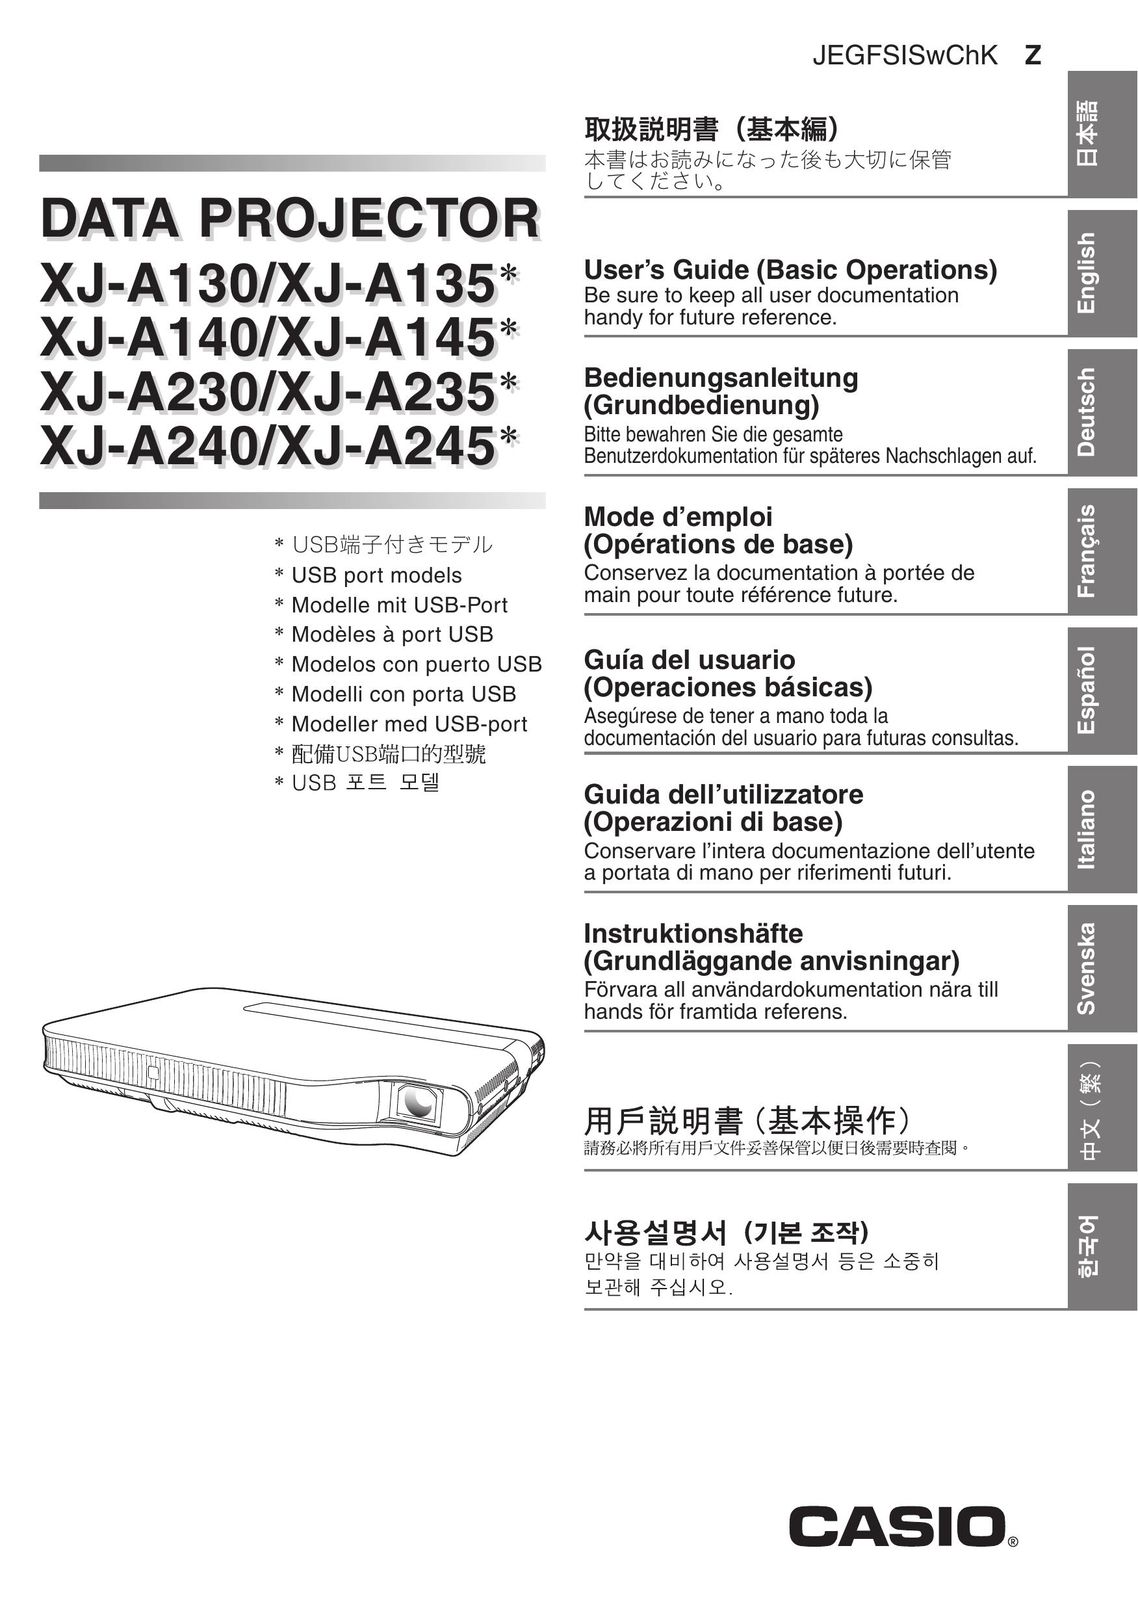 Casio XJ-A230 Projector User Manual